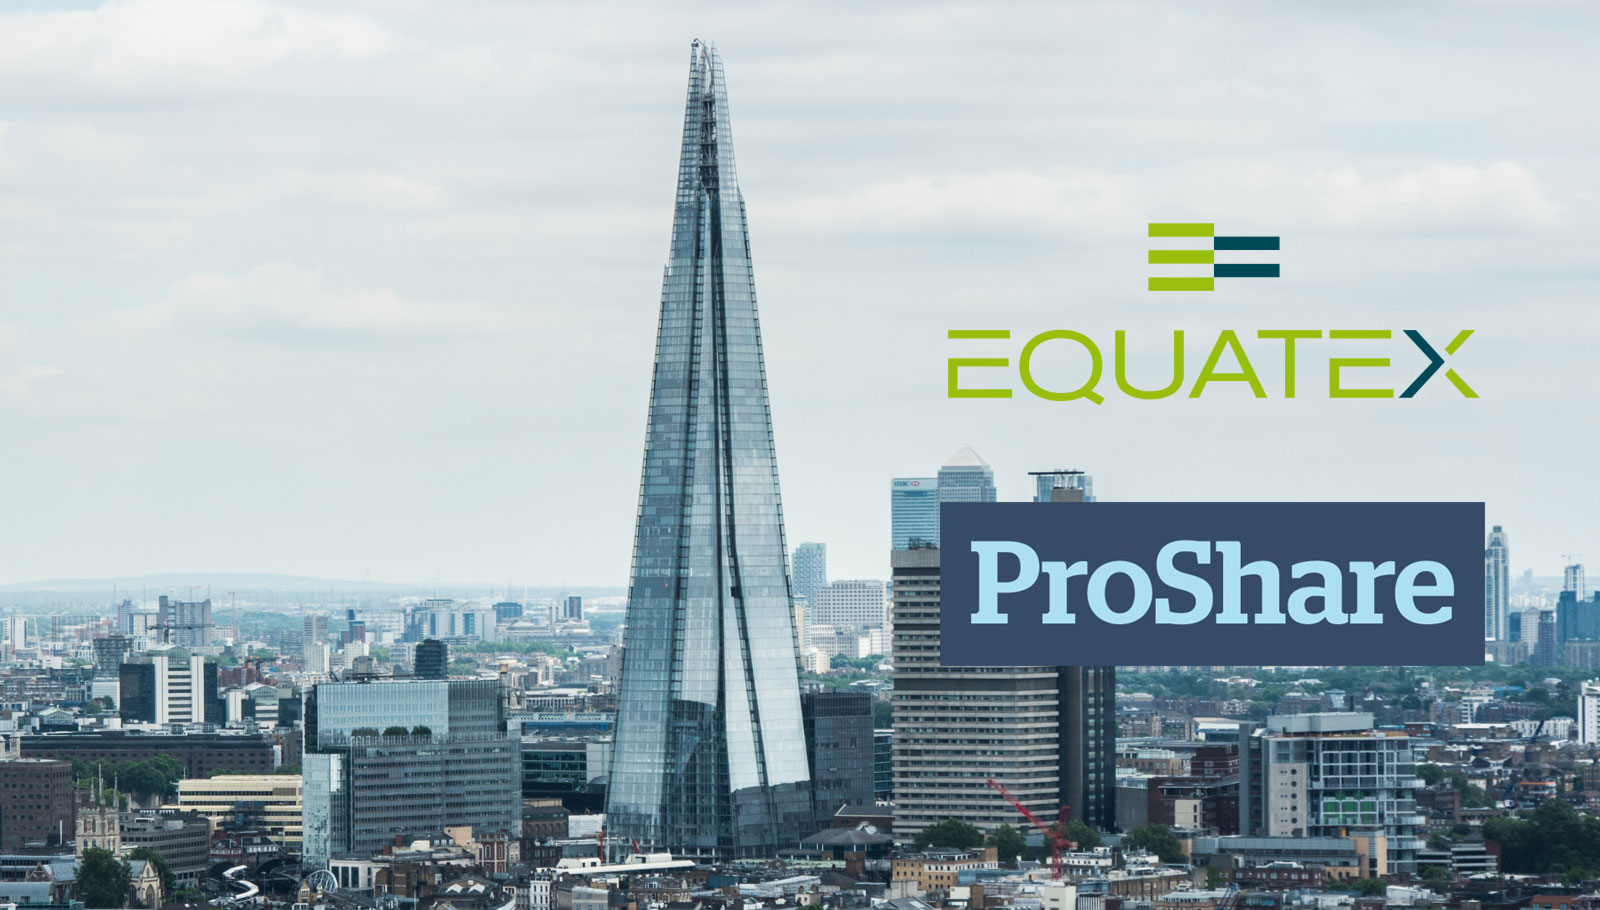 Equatex and ProShare logos on London backdrop